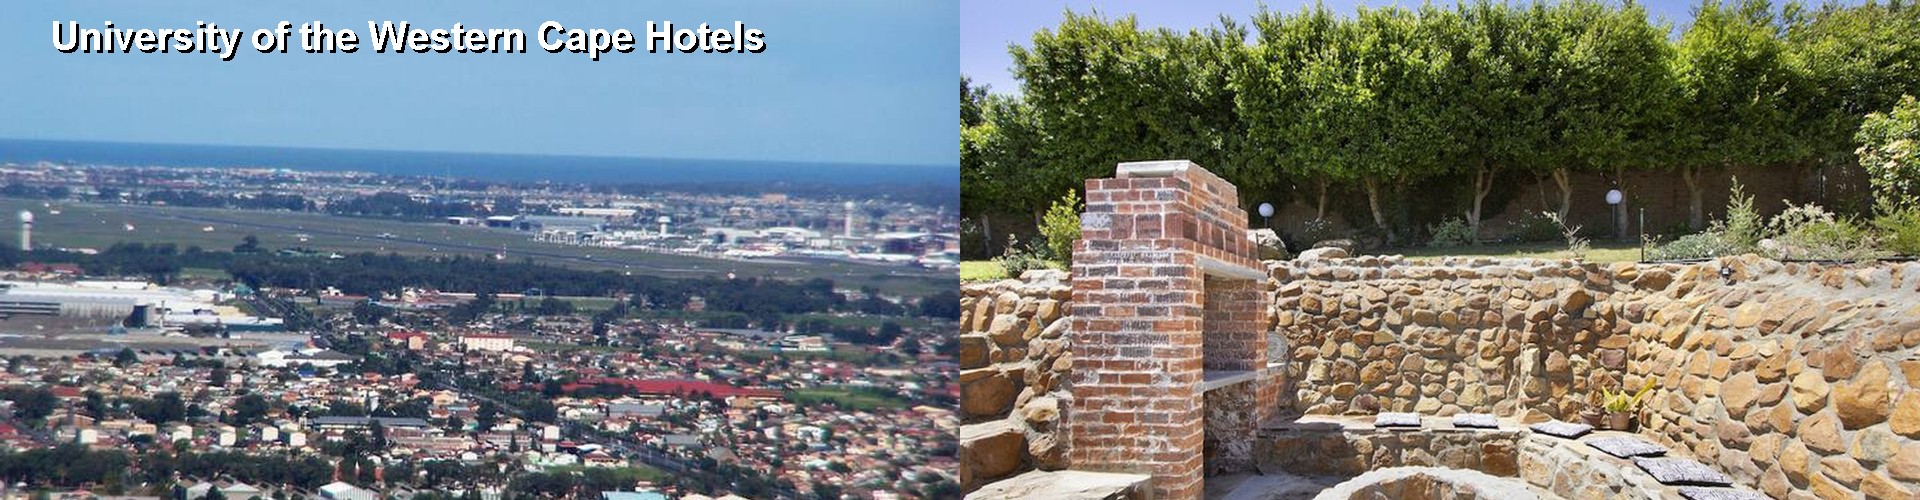 3 Best Hotels near University of the Western Cape